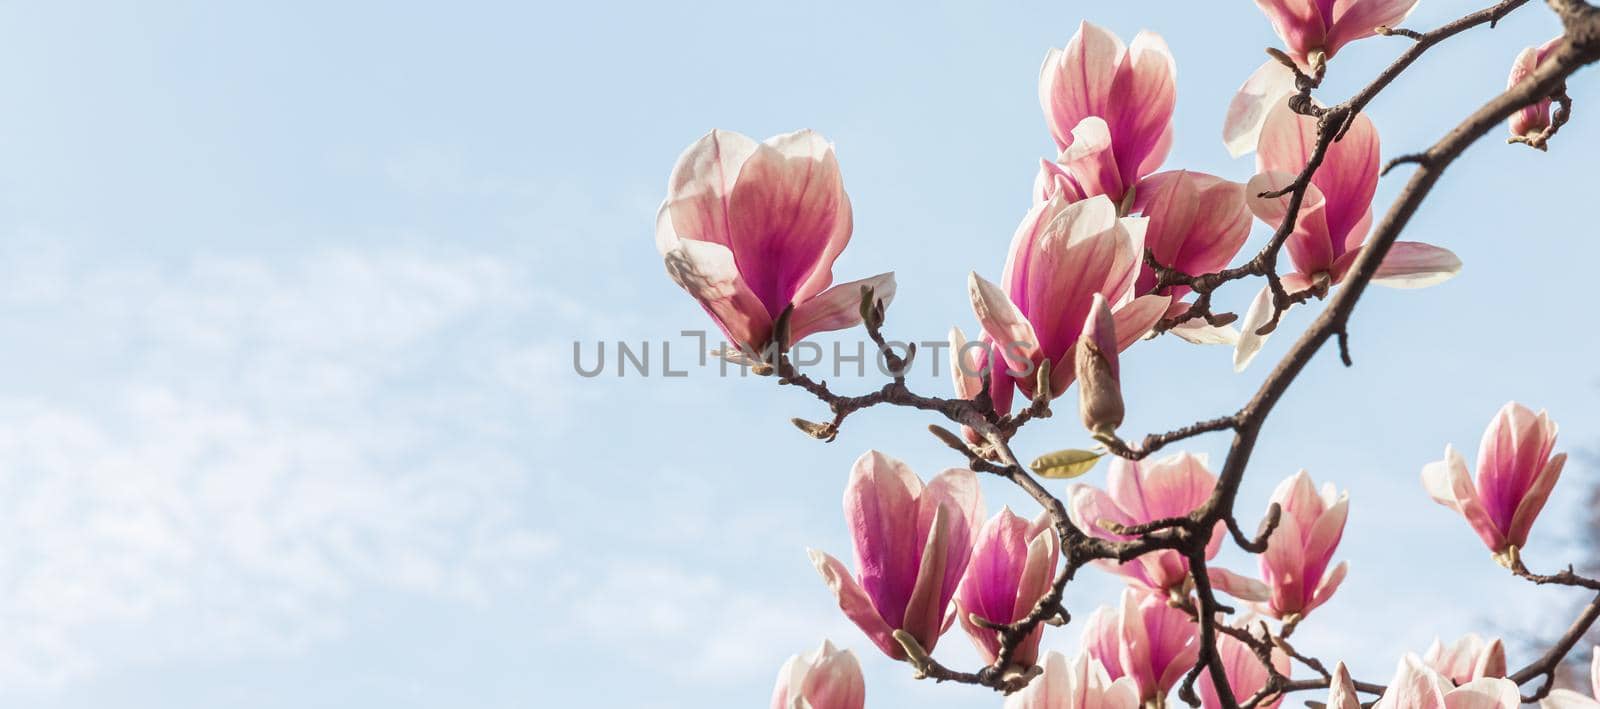 Natural background concept. Pink magnolia branch. Magnolia tree blossom. Blossom magnolia branch against nature background. Magnolia flowers in spring time.